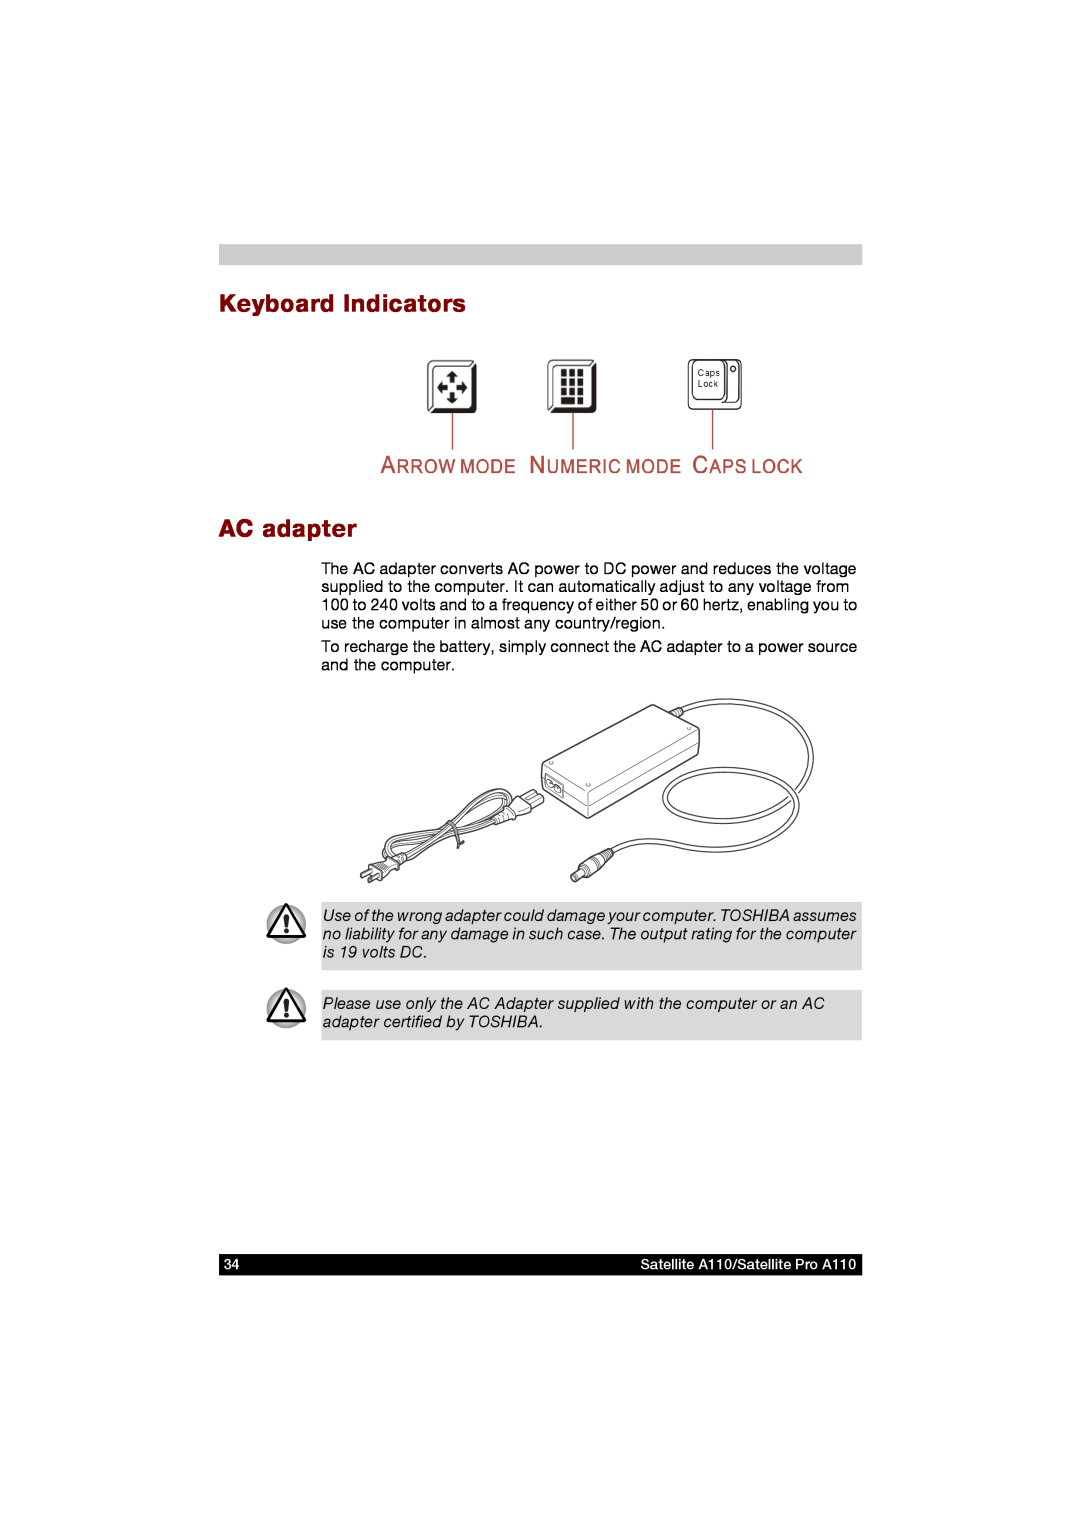 Toshiba A110 user manual Keyboard Indicators AC adapter 